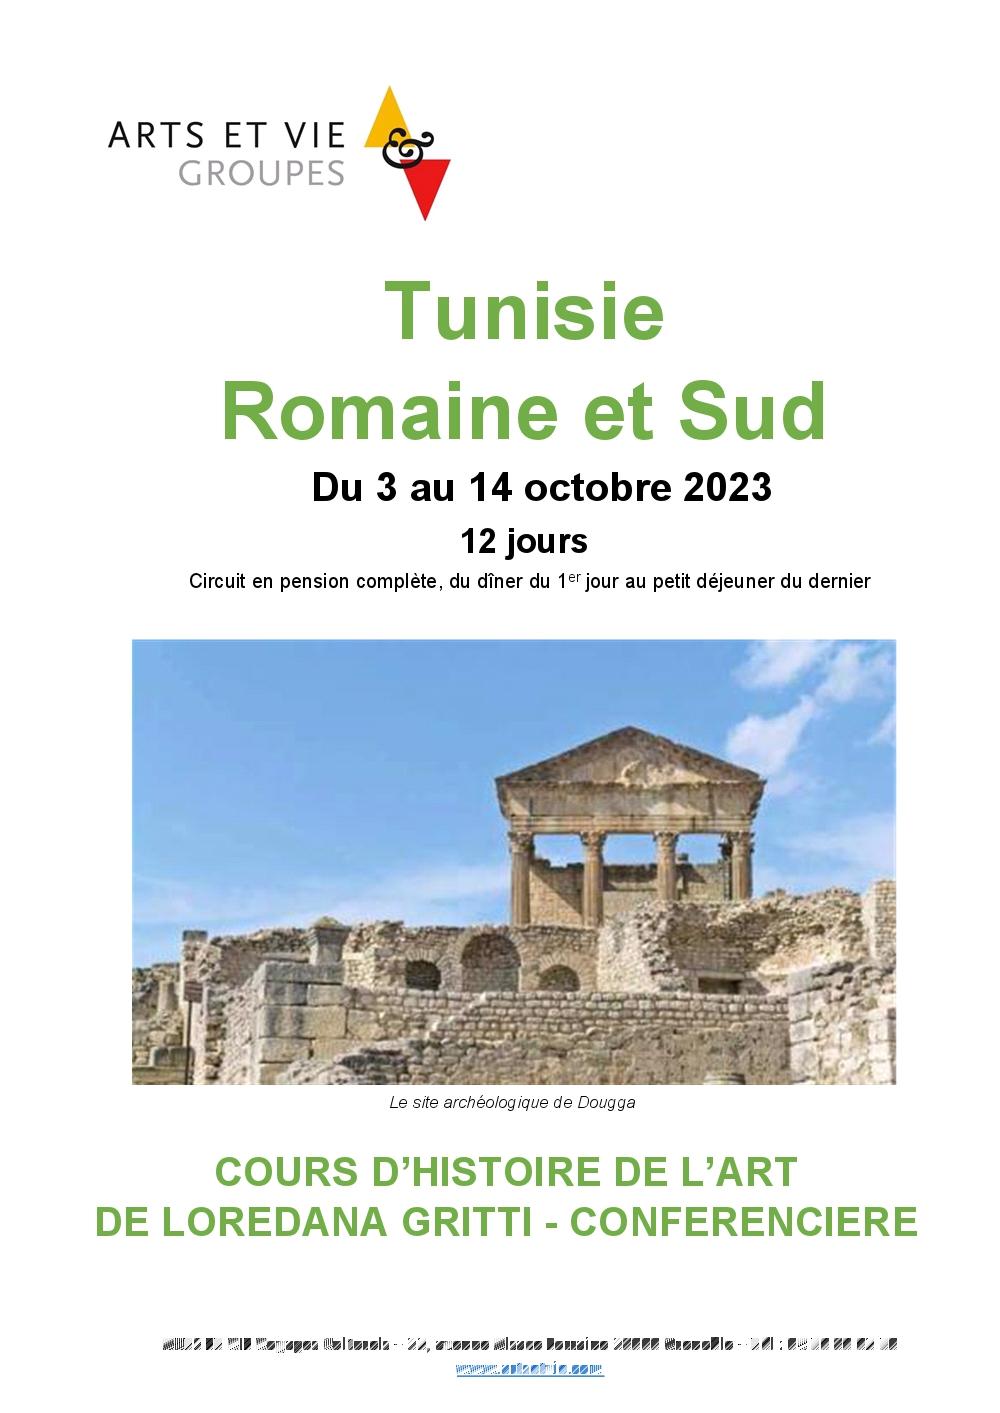 Loredana gritti circuit tunisie romaine 3 14 oct 2023 circuit1